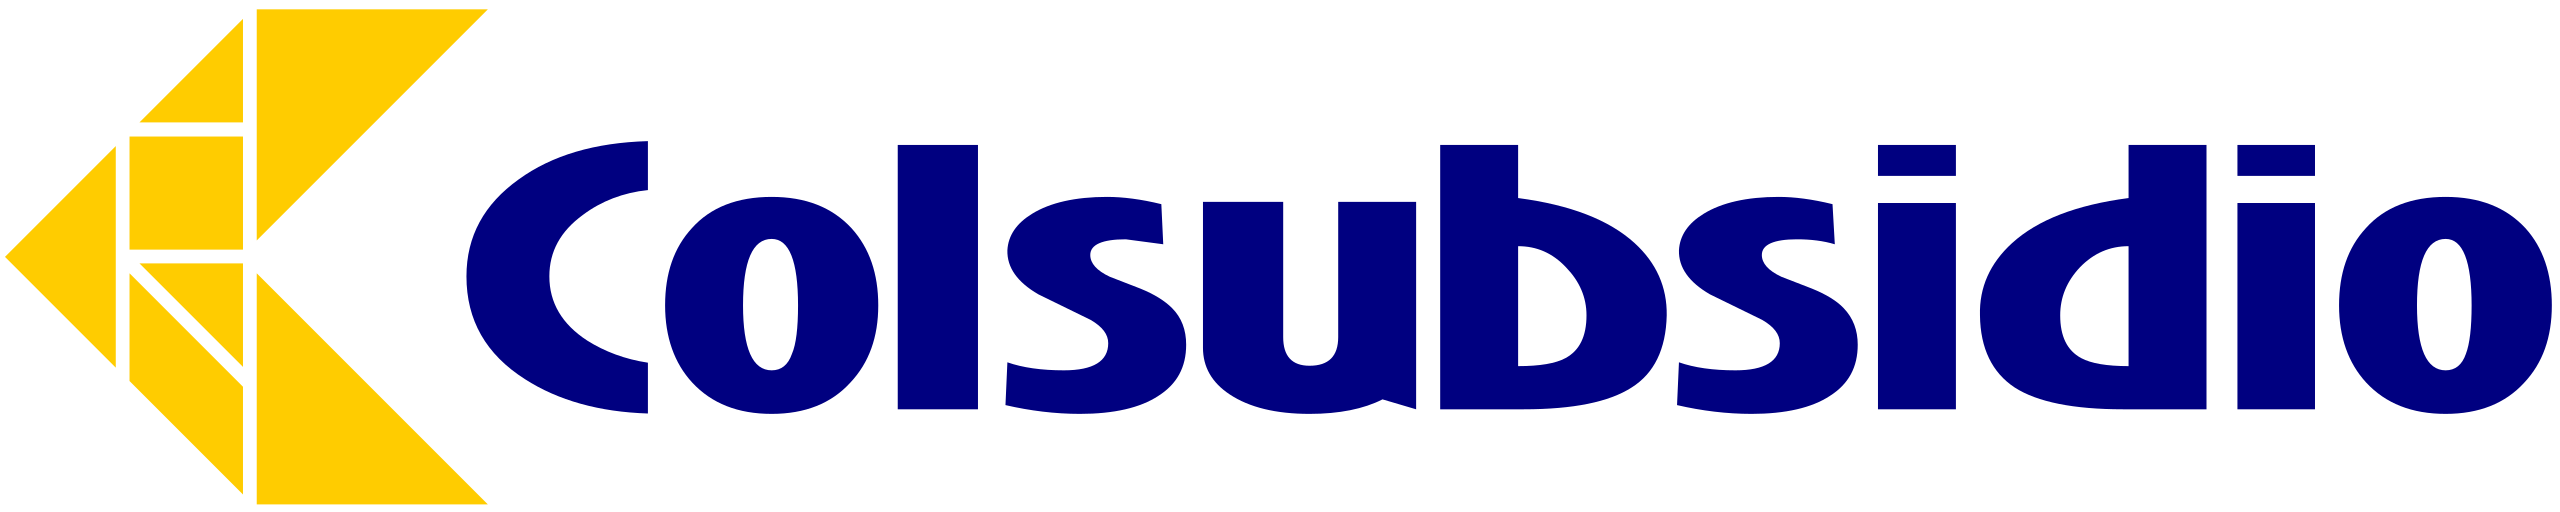 Colsubsidio_logo.svg